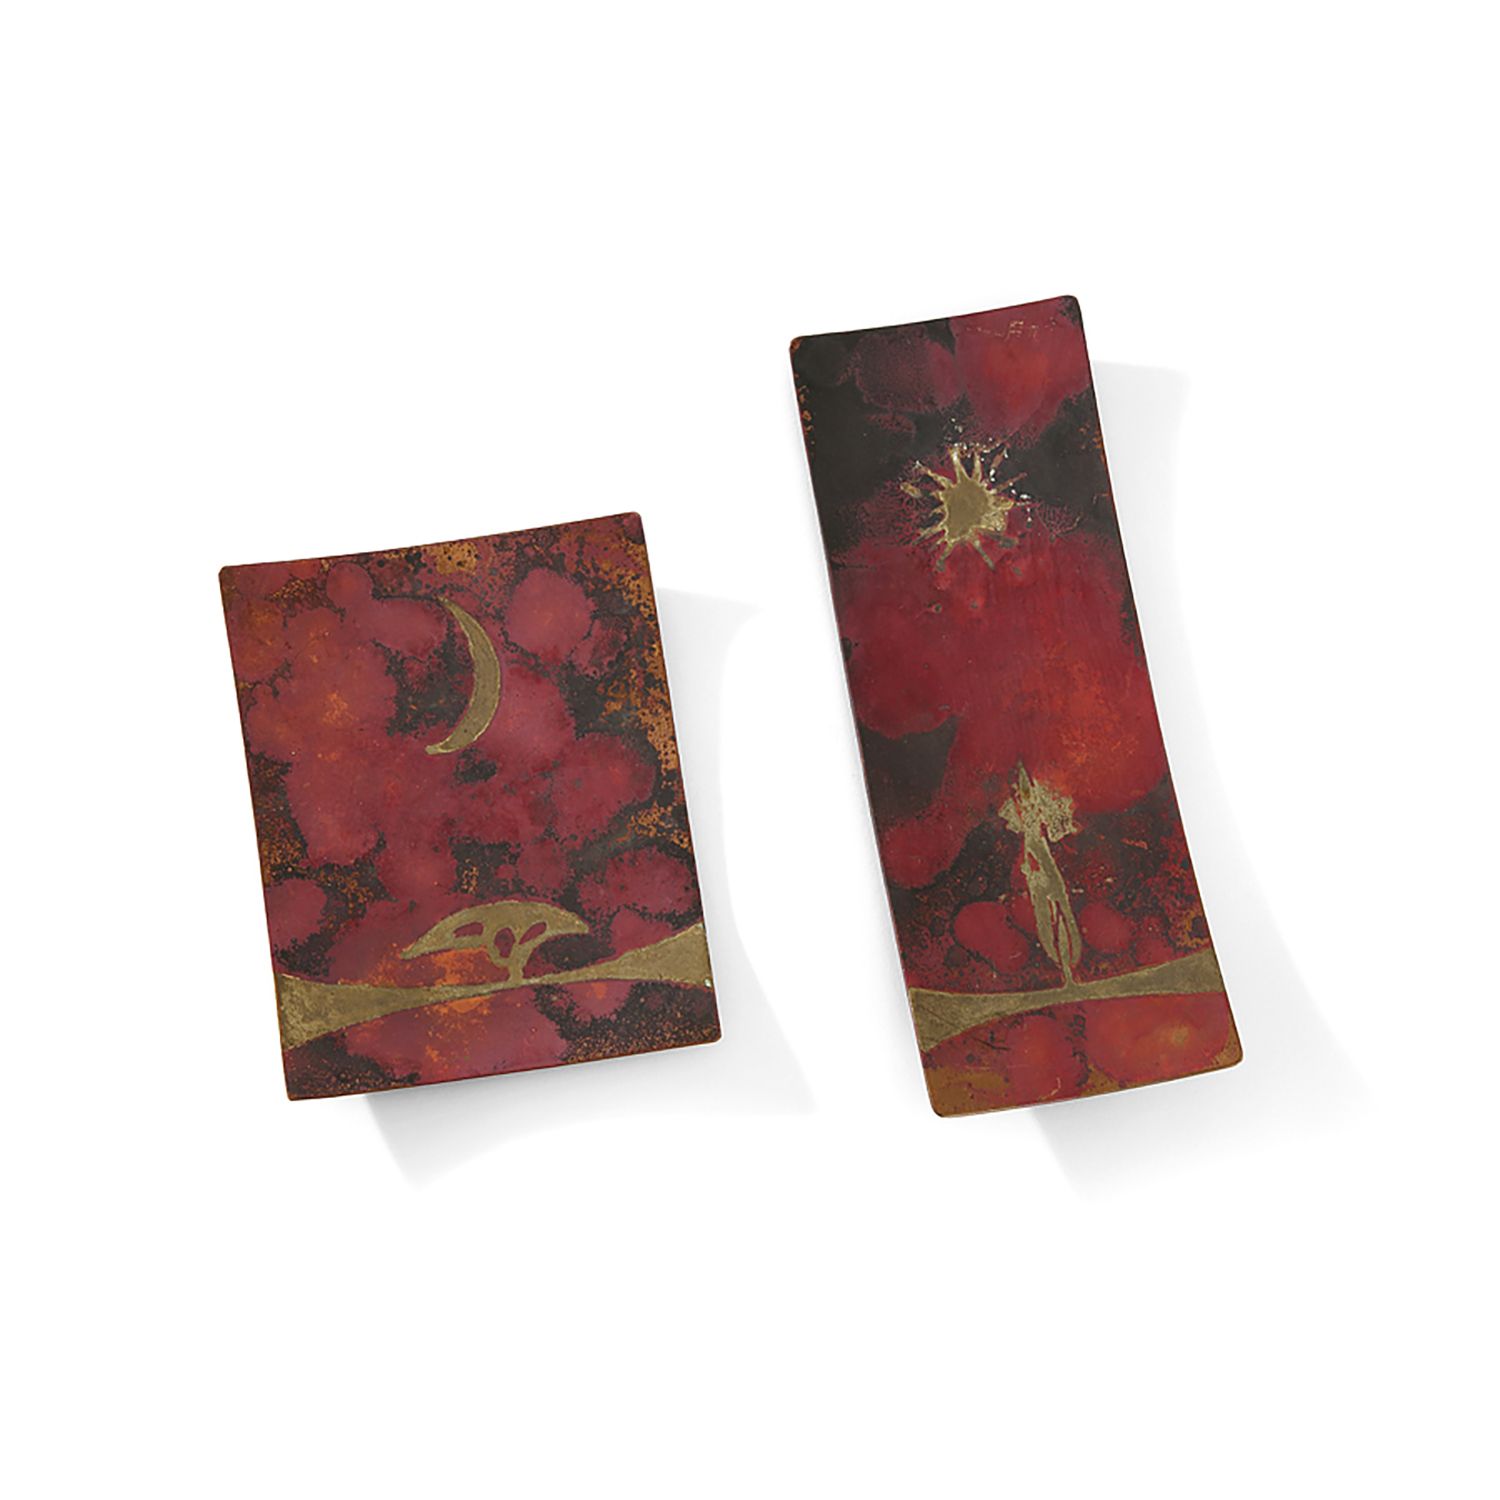 Null 伯纳德-杜南(1908-1998)

一对由铜和黄铜的长方形凹板制成的袖珍餐具，带有多色漆装饰。印有艺术家的字样。

一对铜器小饰品碗，多色漆装饰，有&hellip;